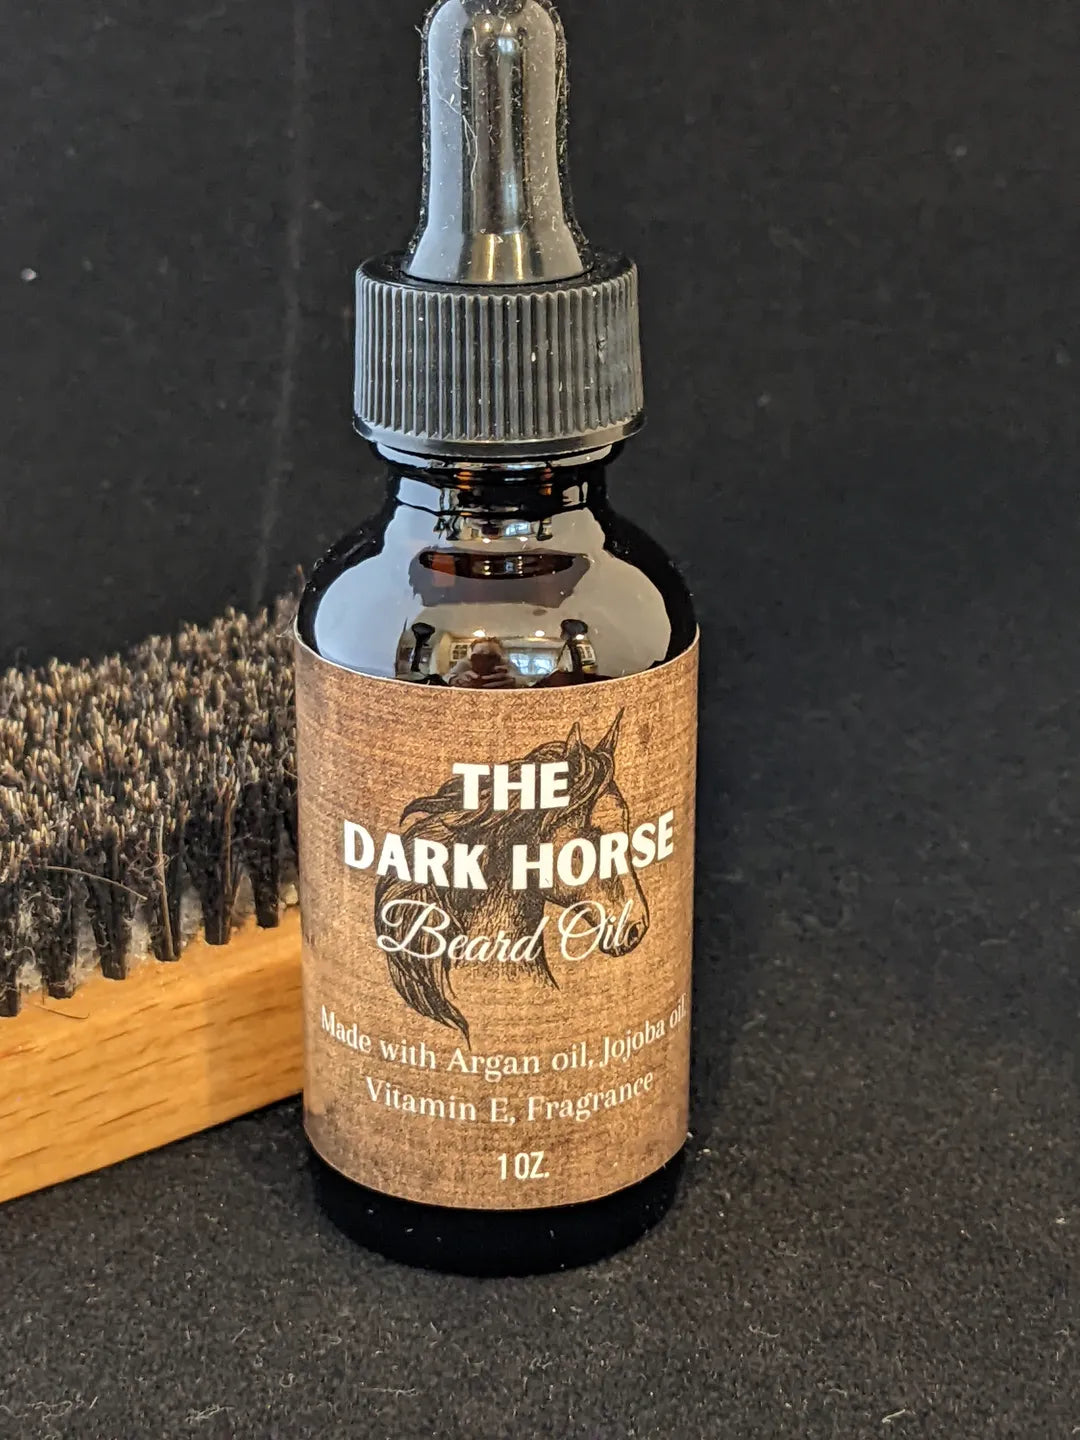 The Dark Horse Beard Oil